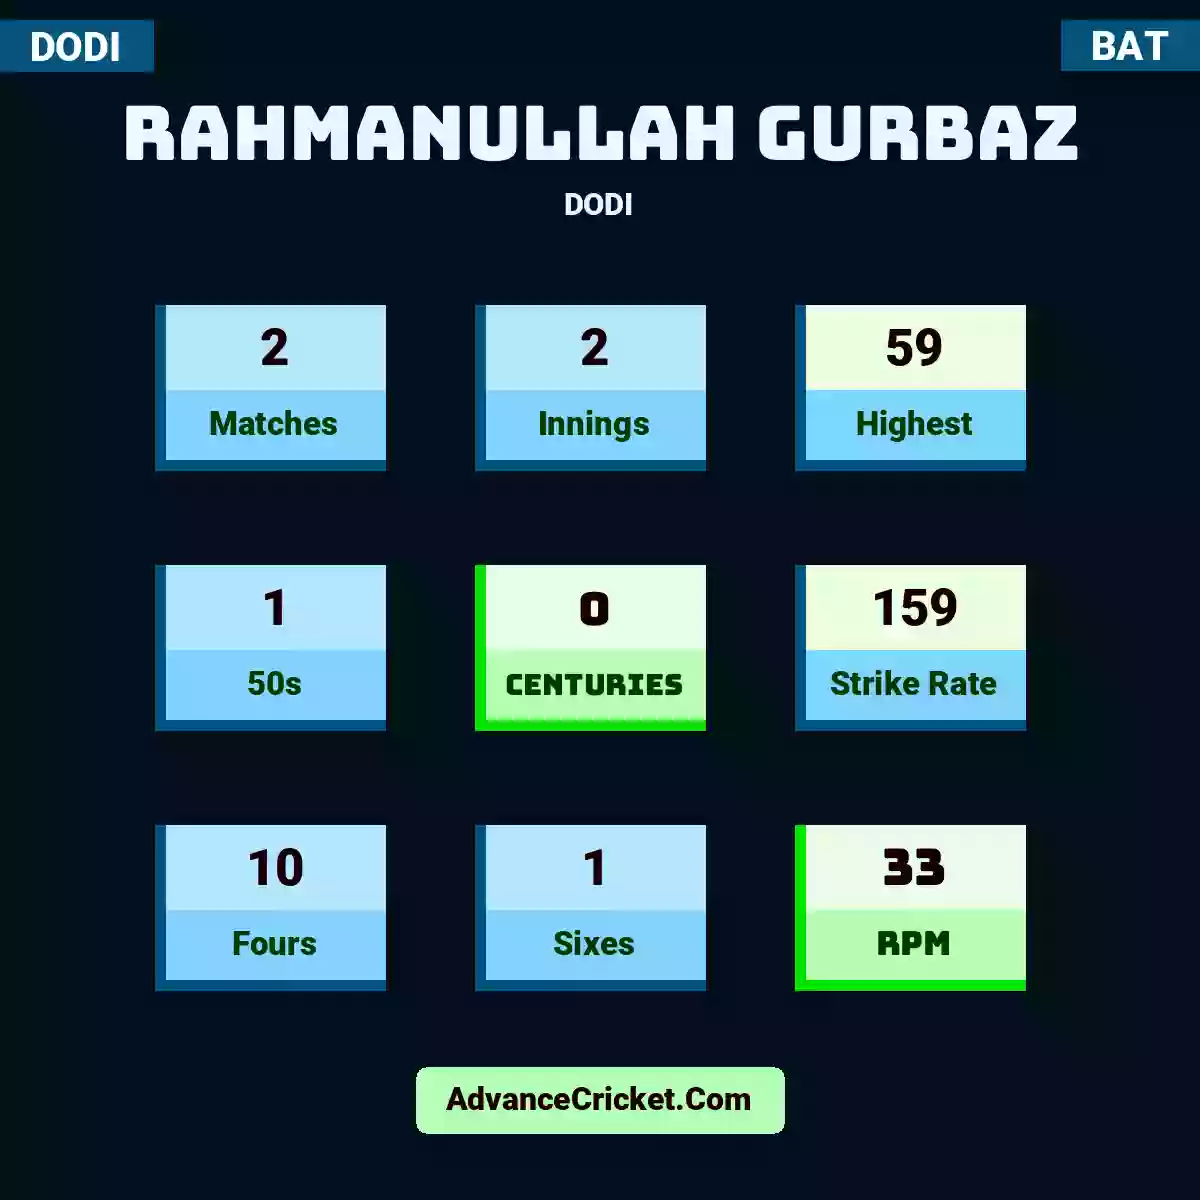 Rahmanullah Gurbaz DODI , Rahmanullah Gurbaz played 2 matches, scored 59 runs as highest, 1 half-centuries, and 0 centuries, with a strike rate of 159. R.Gurbaz hit 10 fours and 1 sixes, with an RPM of 33.